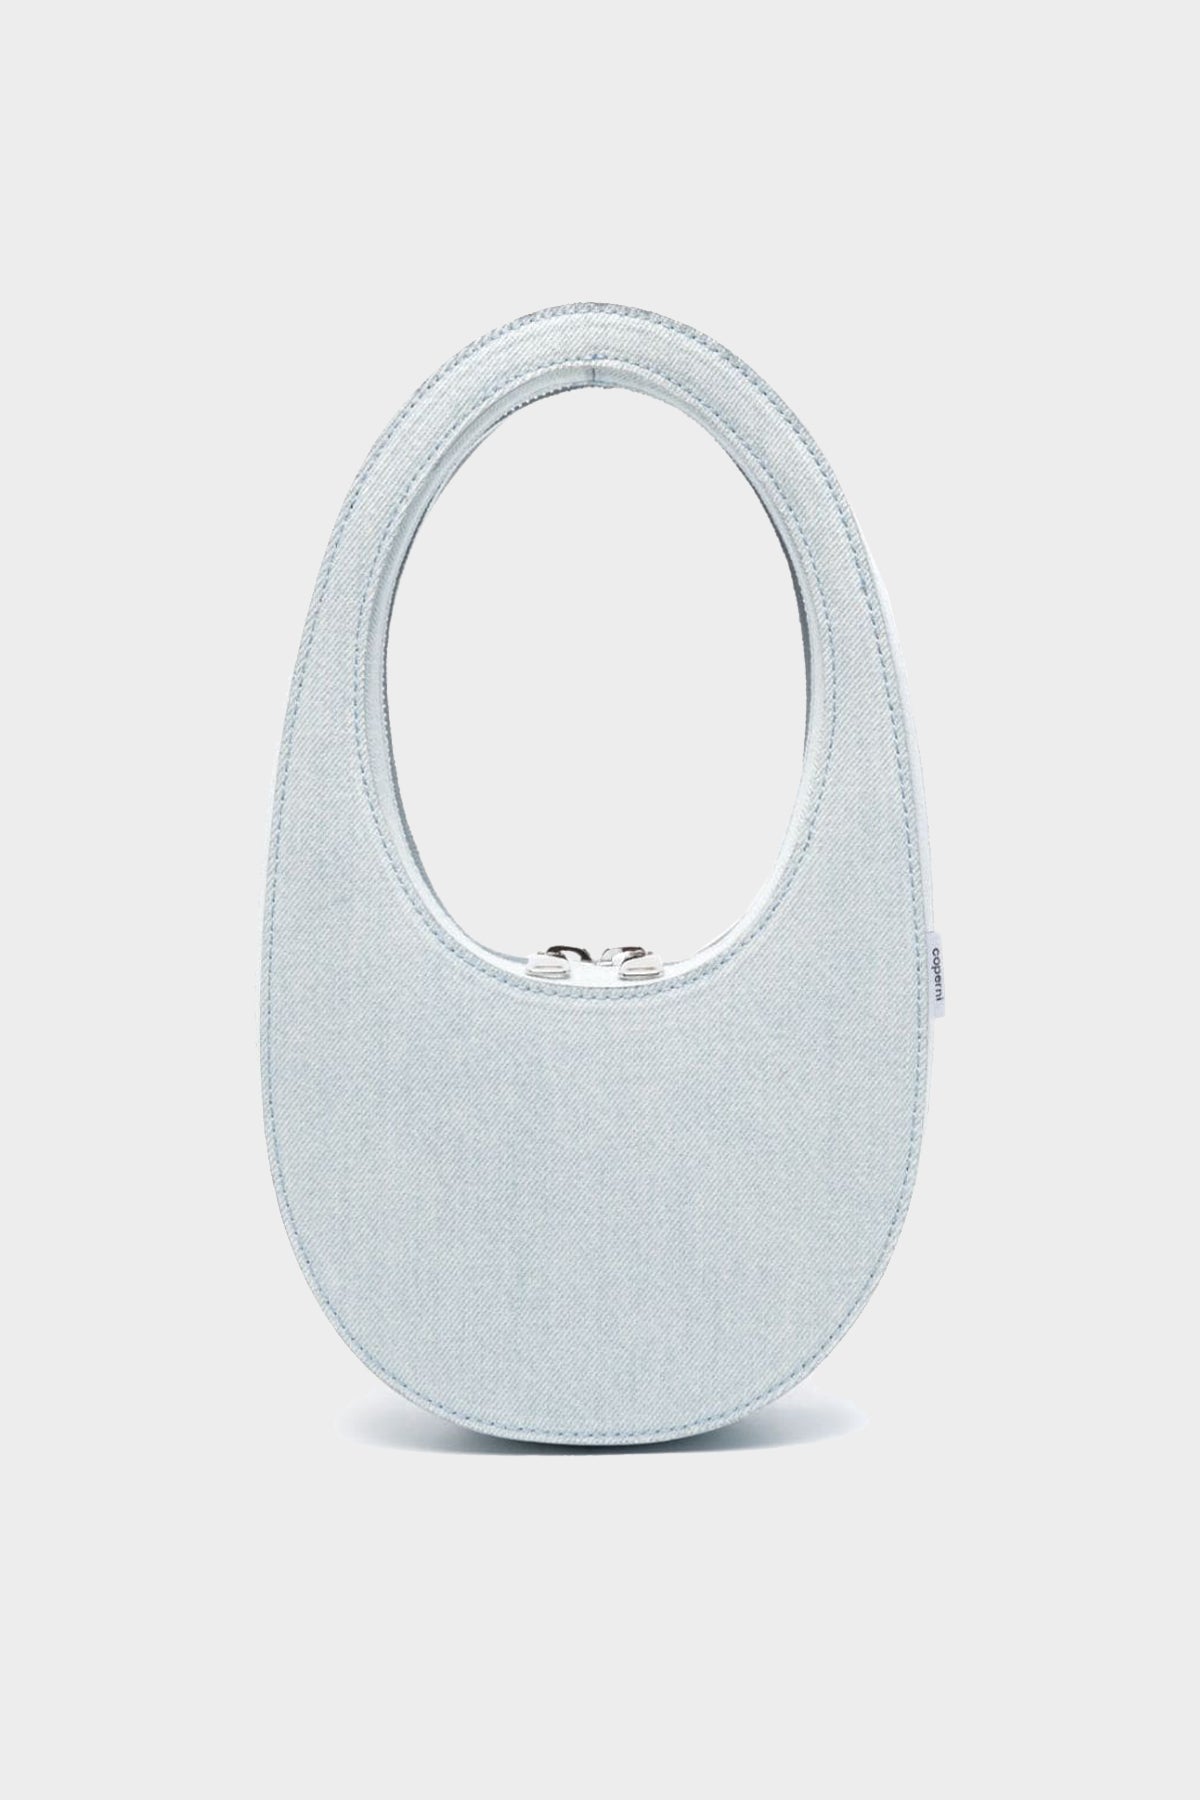 Denim Mini Swipe Bag in Ice Blue - shop-olivia.com